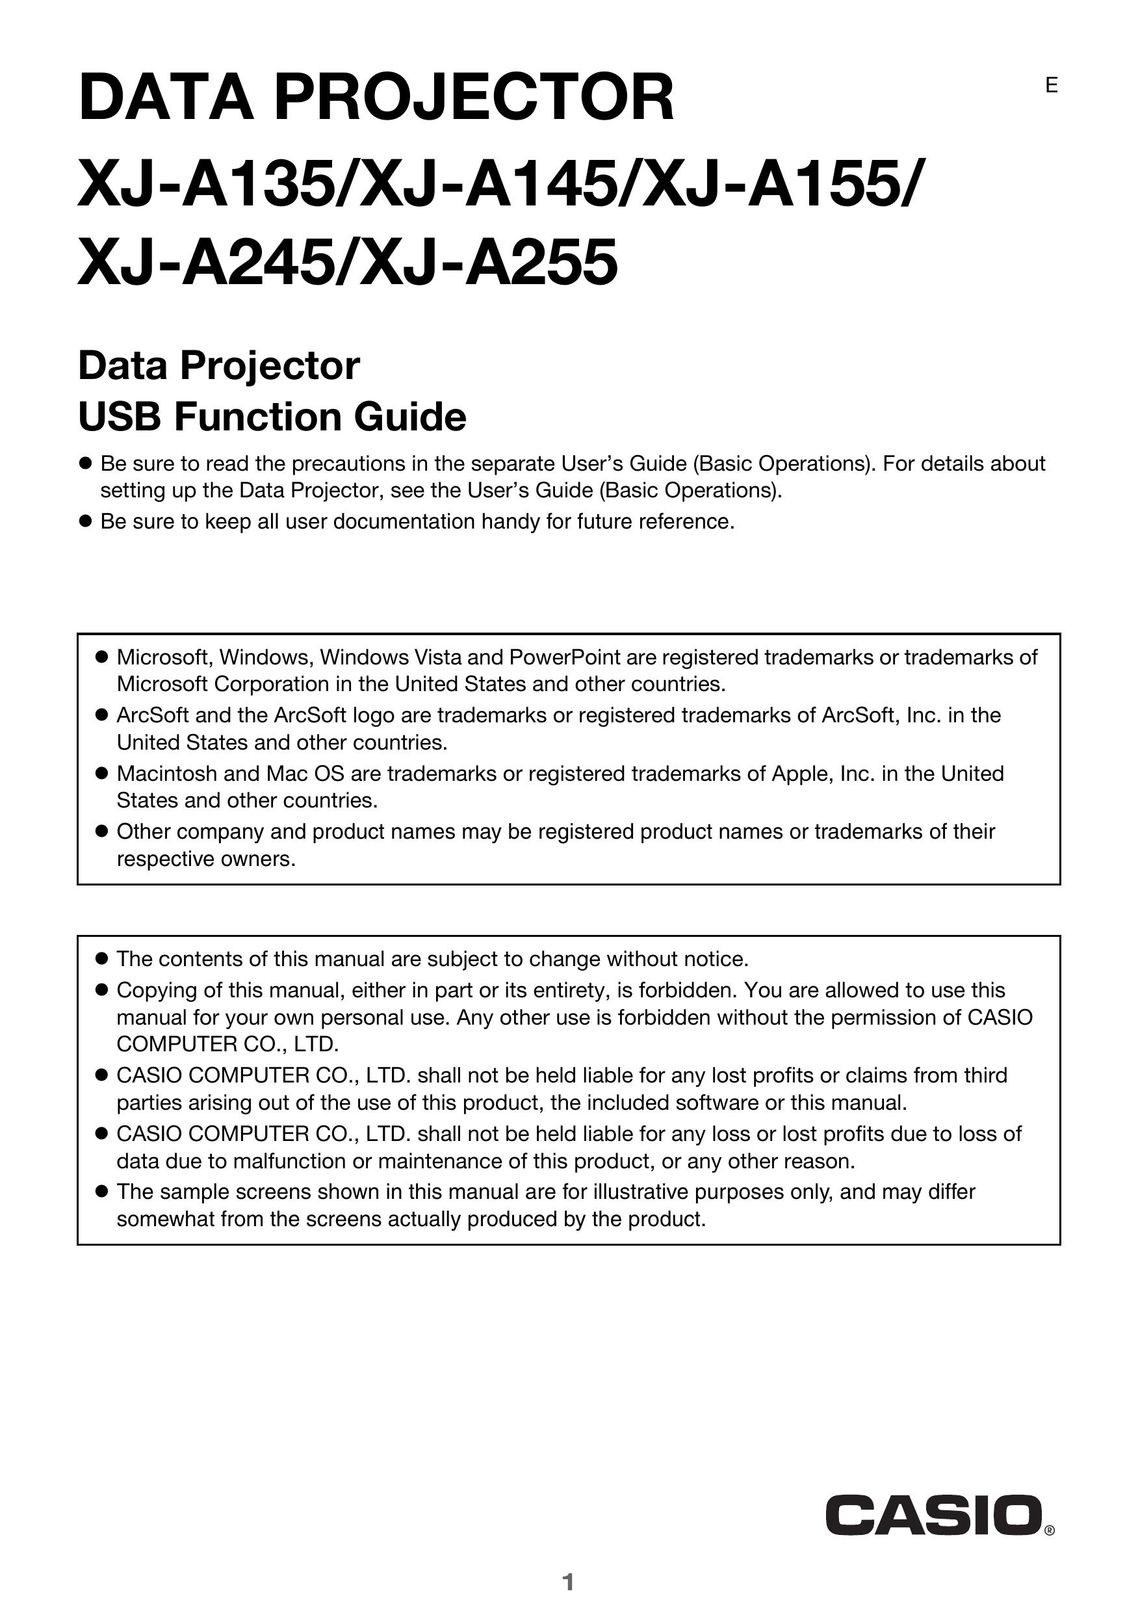 Casio XJ-A145 Projector User Manual